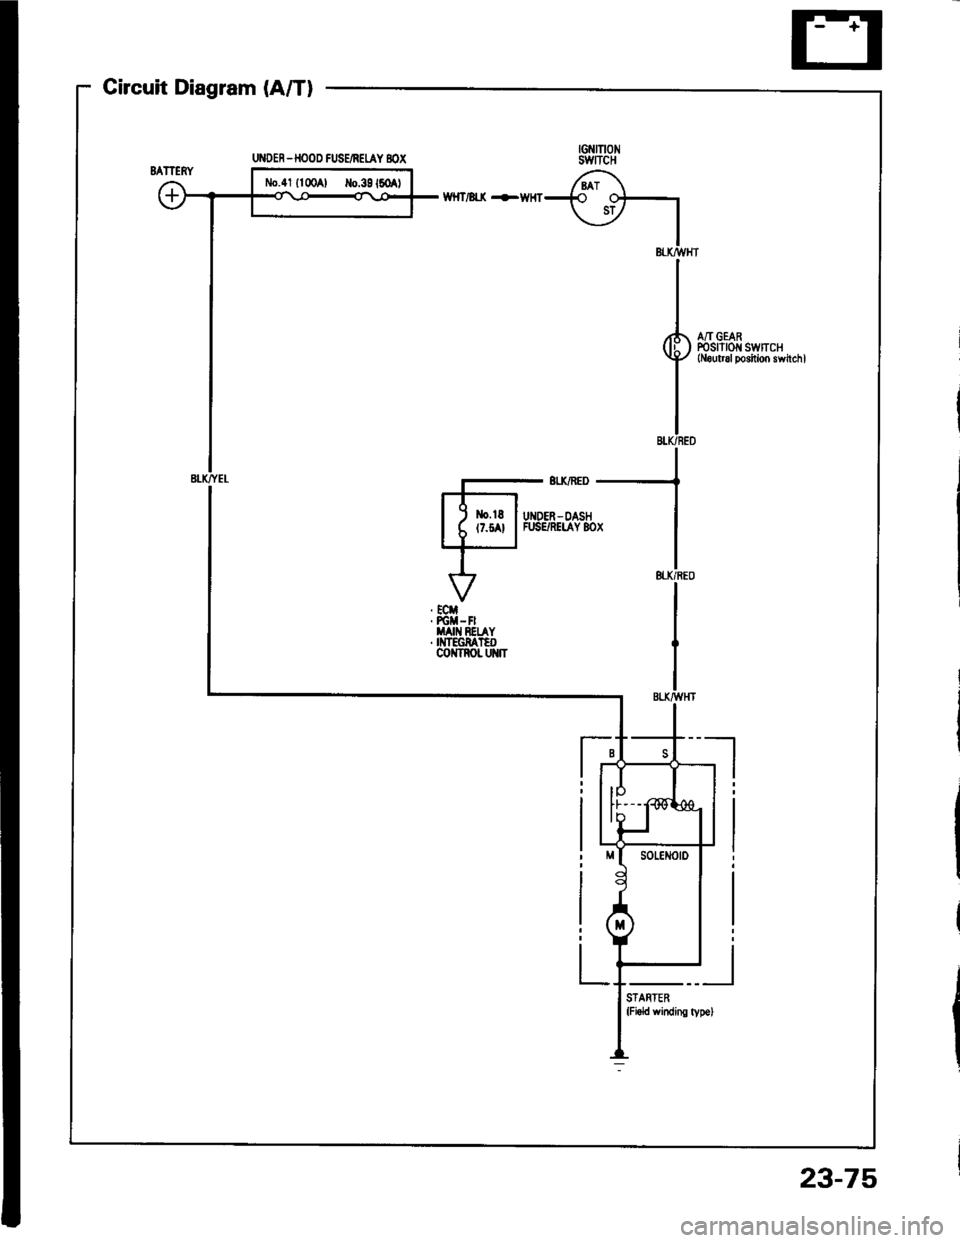 HONDA INTEGRA 1994 4.G Workshop Manual Circuit Diagram (A/T)
G?{raoswncH
6i\-{€ o+
\_v I
IBl-torvHT
II
I,(h A/I GEAR
g, ffi.:11?[:#ir11,",,
I
IBI.K/BED
UI{DER -HOOD FUSE/NEUY BOX
N,0.41 {l00Al Io.39160 t 